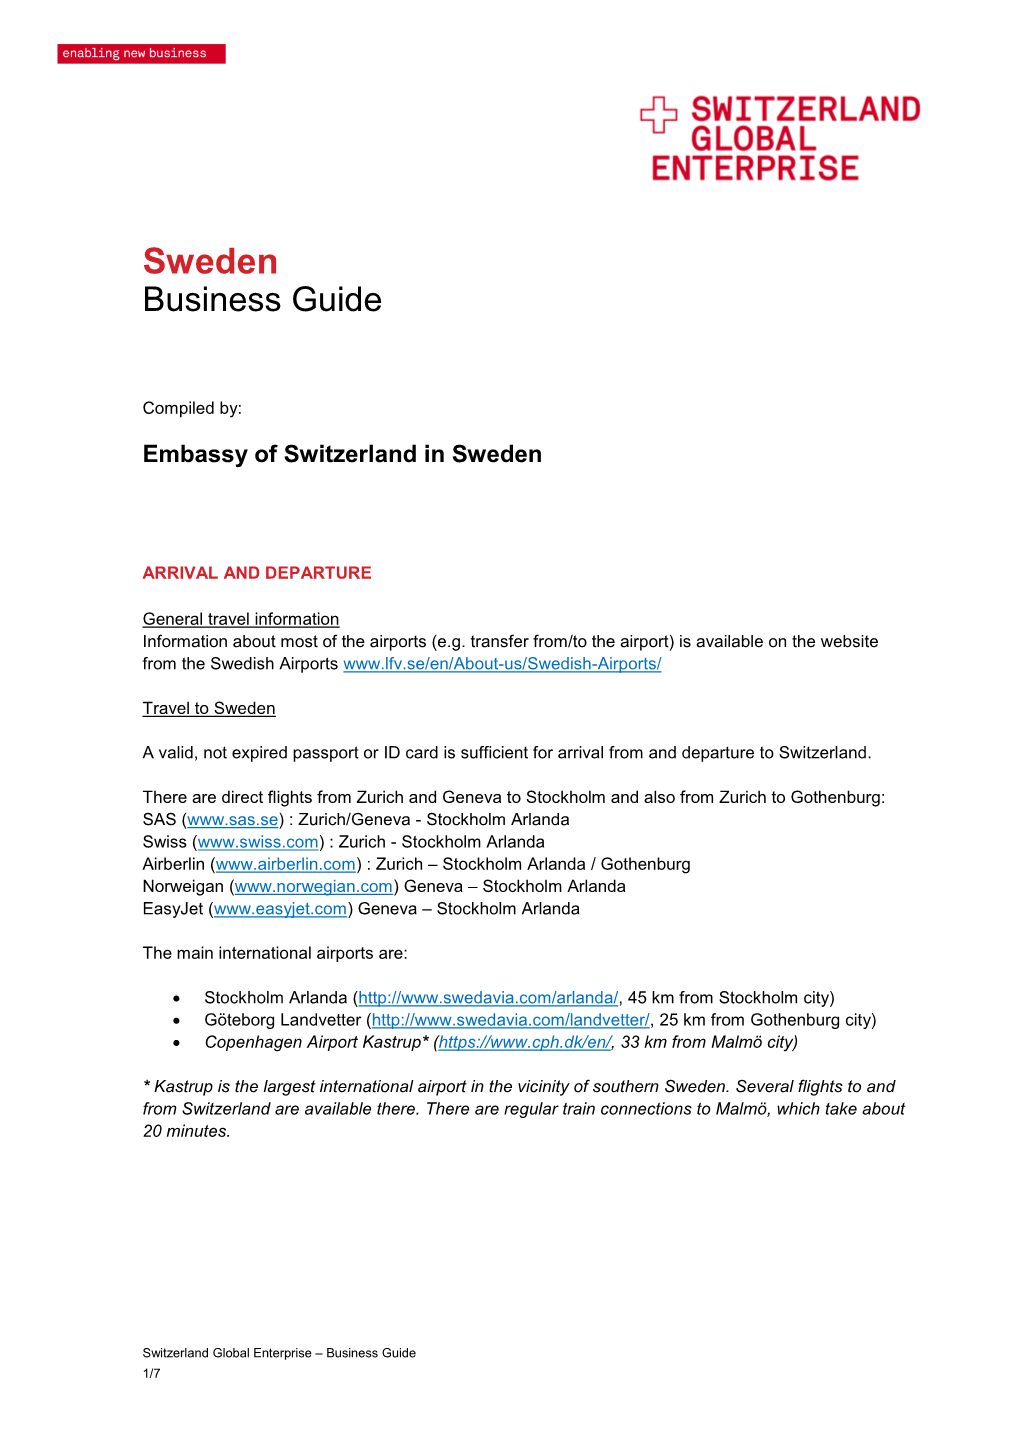 Sweden Business Guide